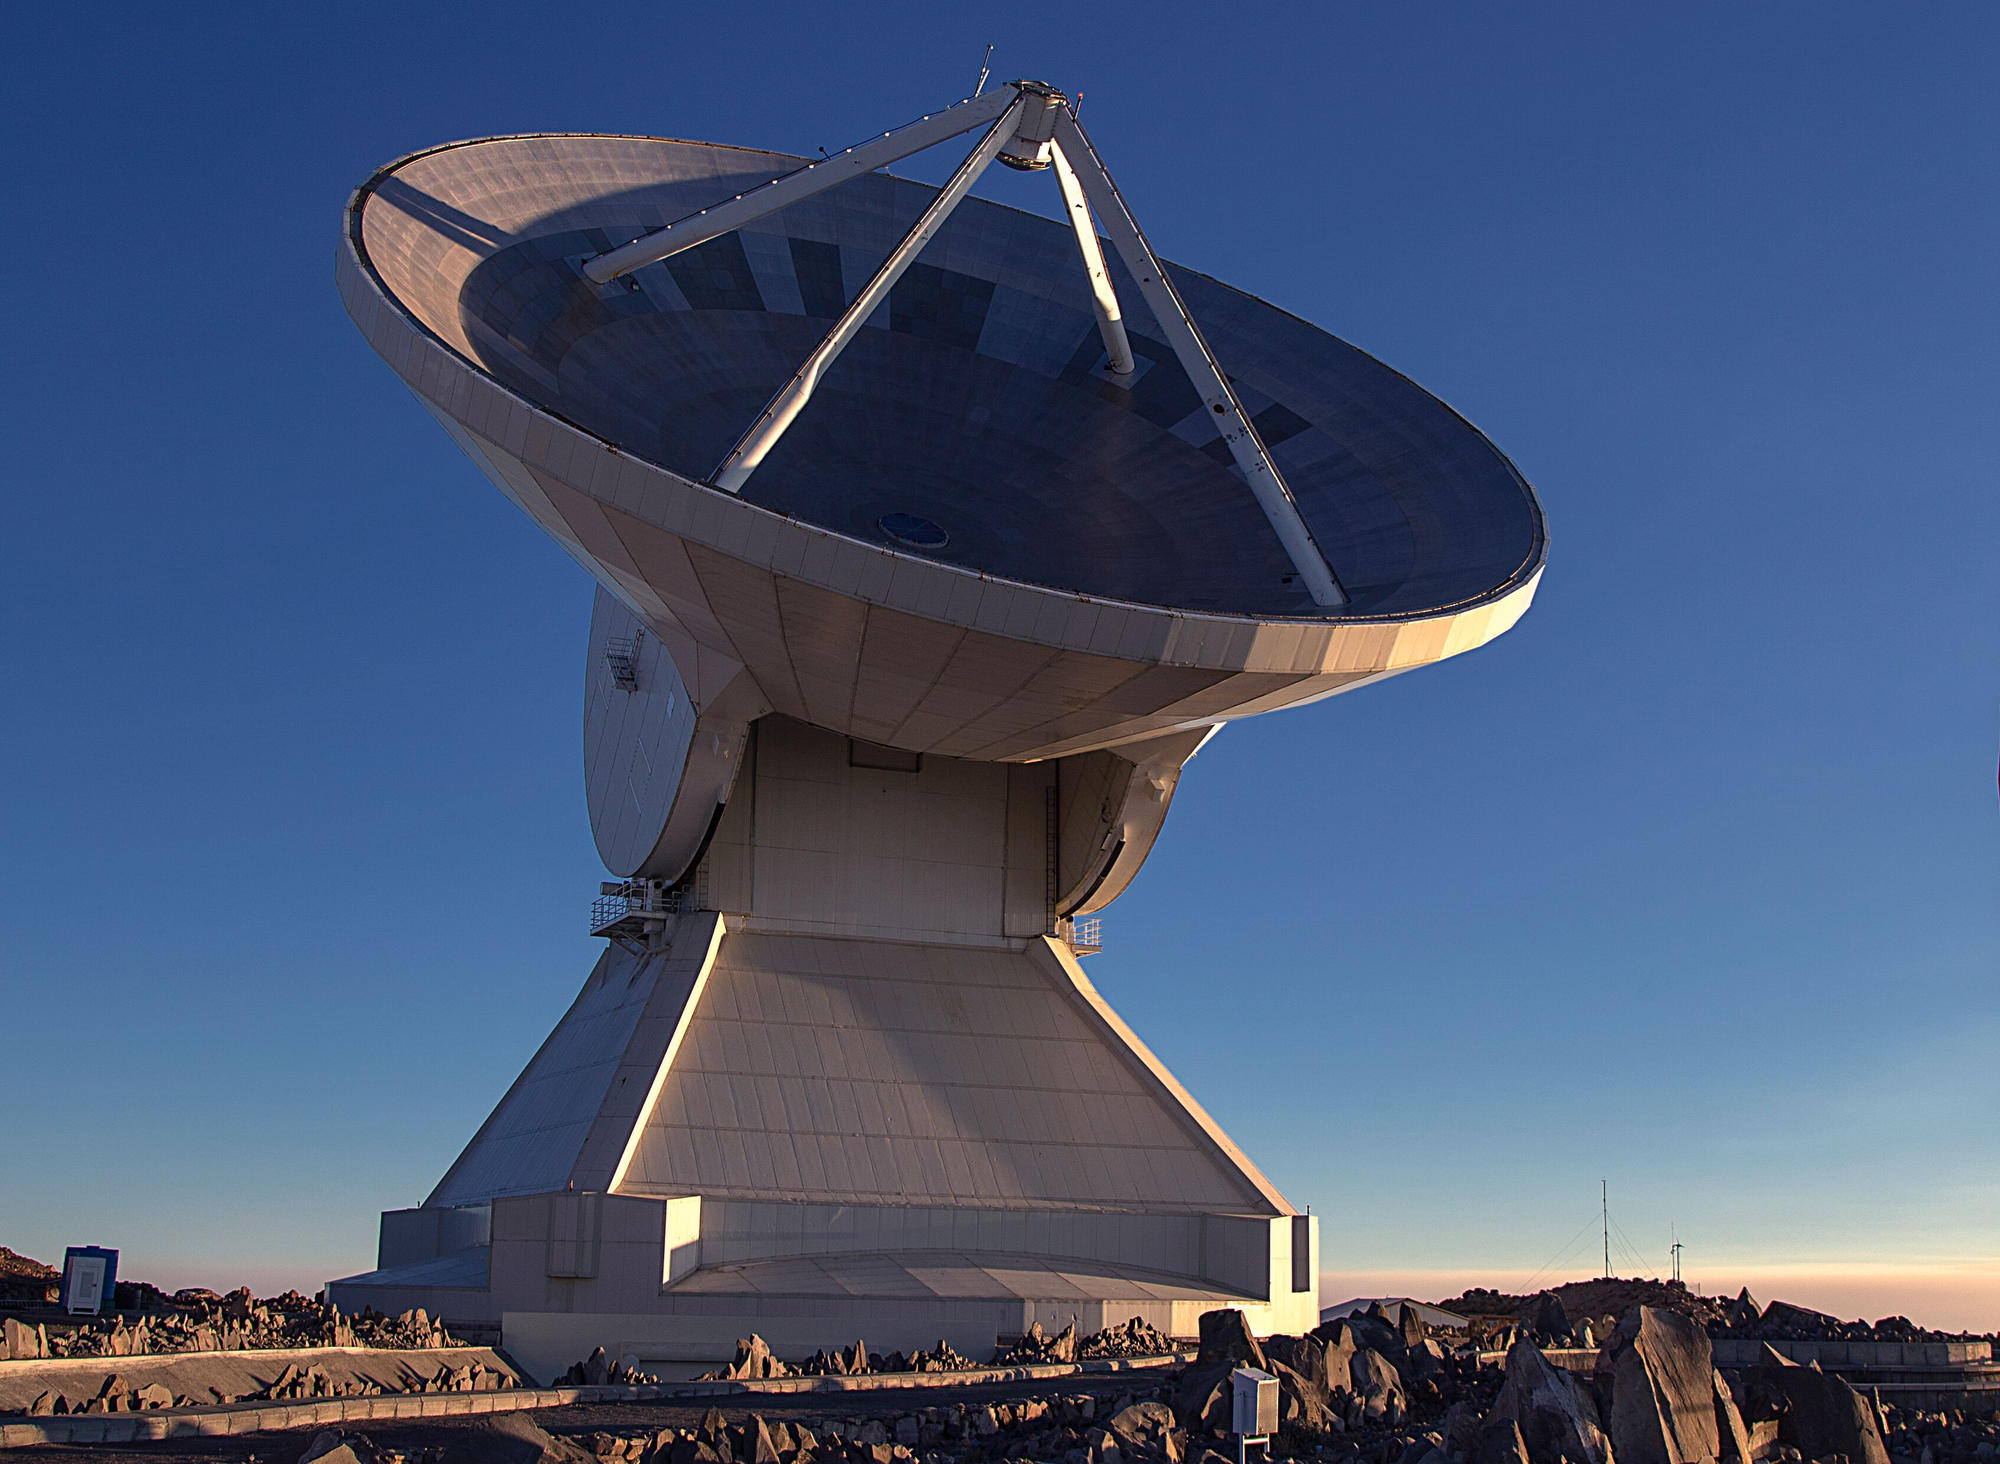 Large Millimeter Telescope "Alfonso Serrano" at sunset.